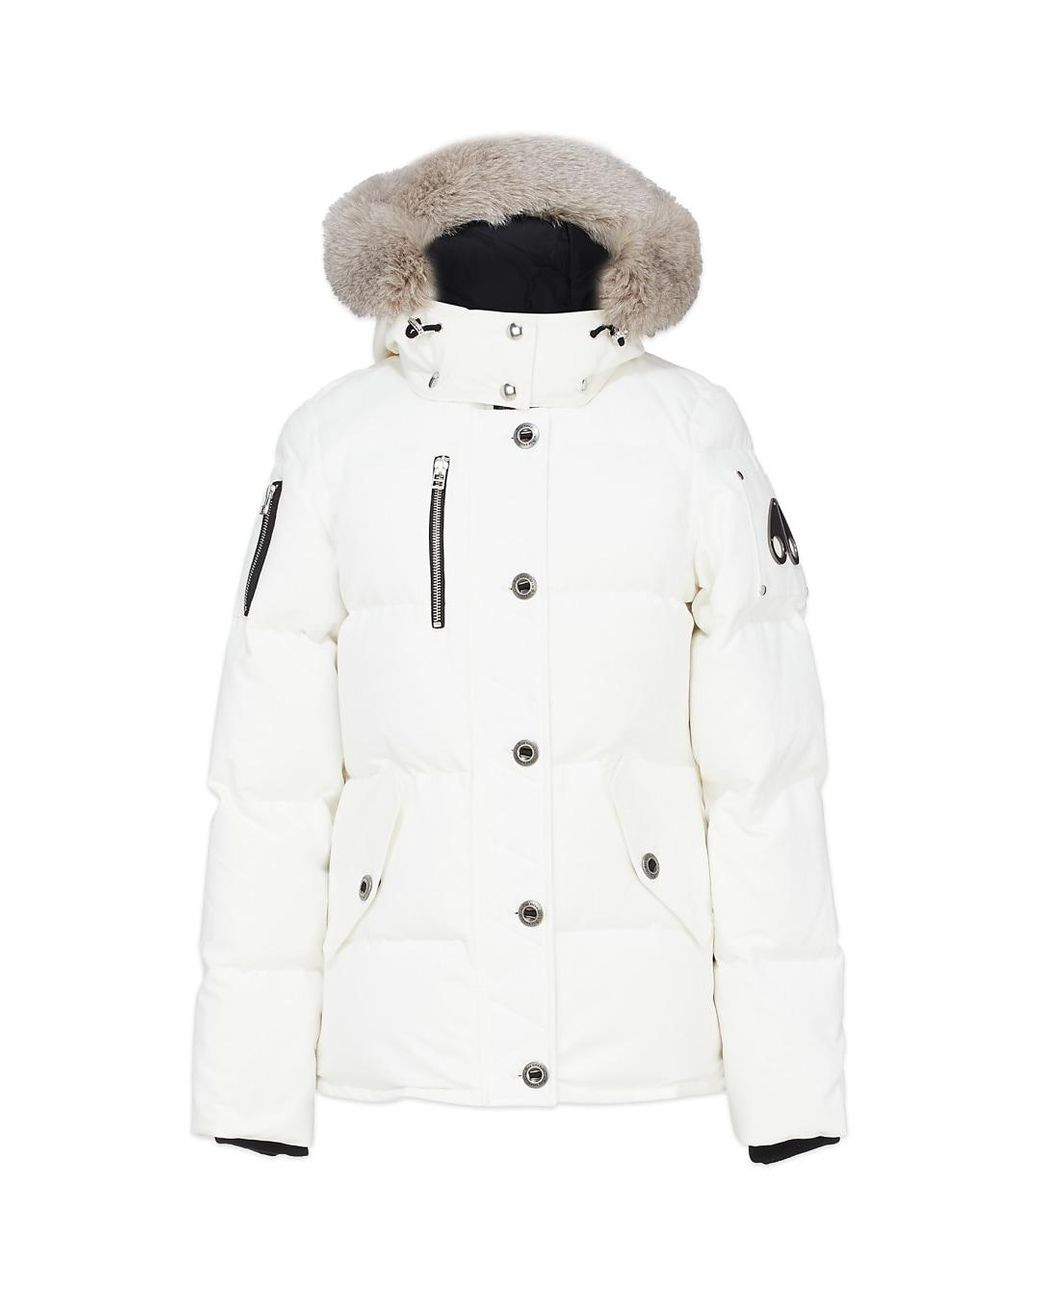 Moose Knuckles Fur 3q Jacket in White - Lyst